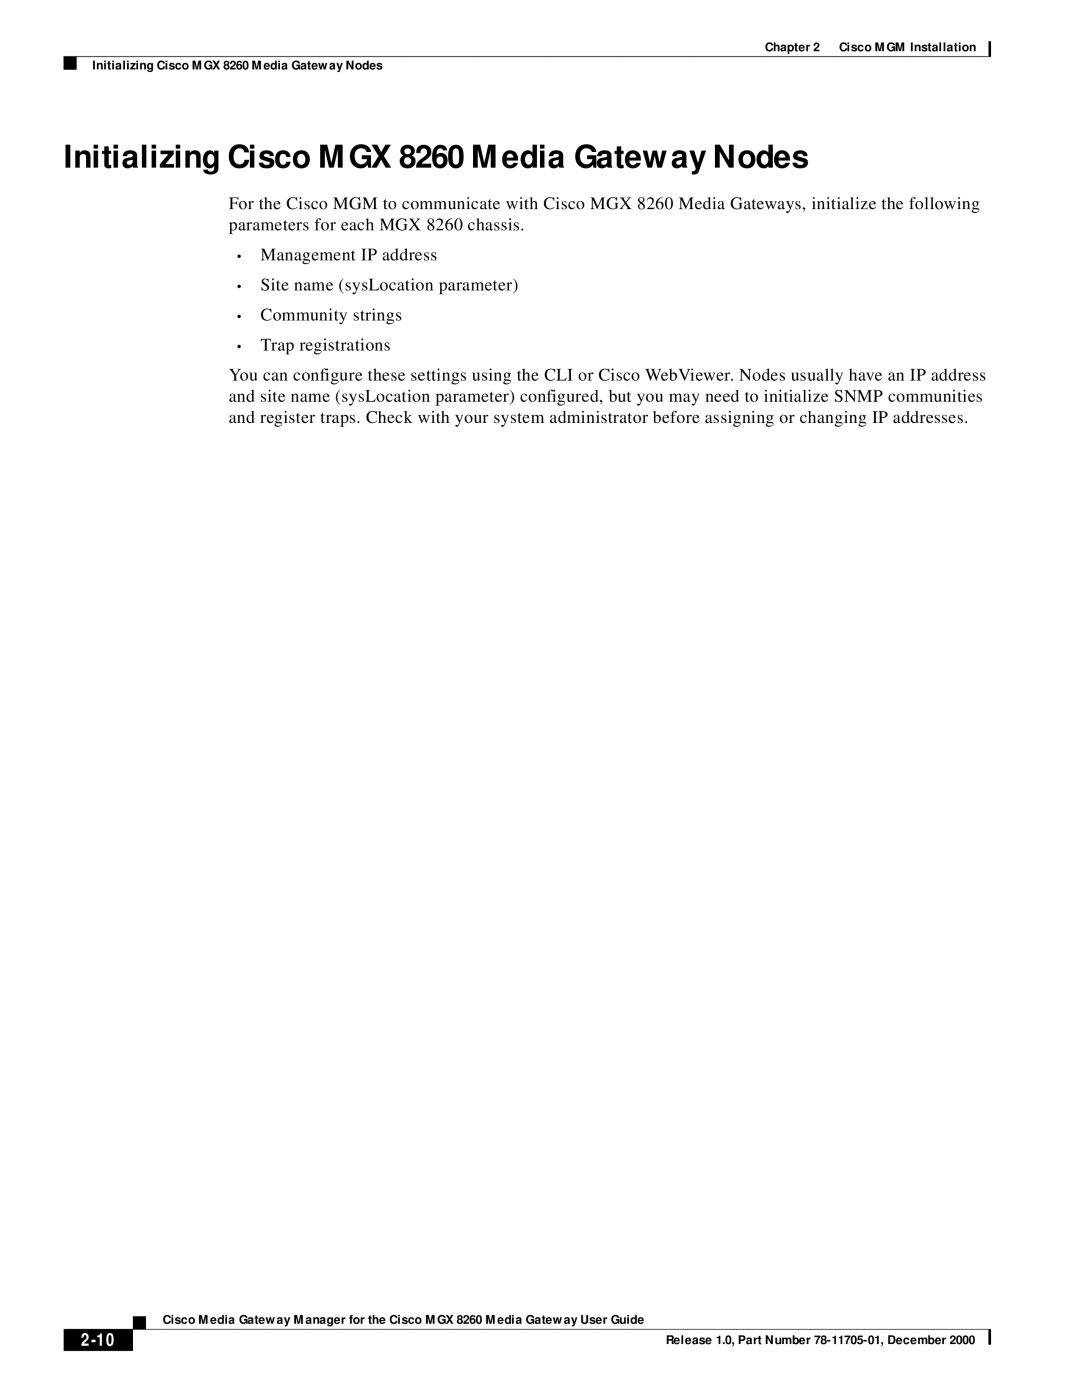 Cisco Systems manual Initializing Cisco MGX 8260 Media Gateway Nodes, 2-10 